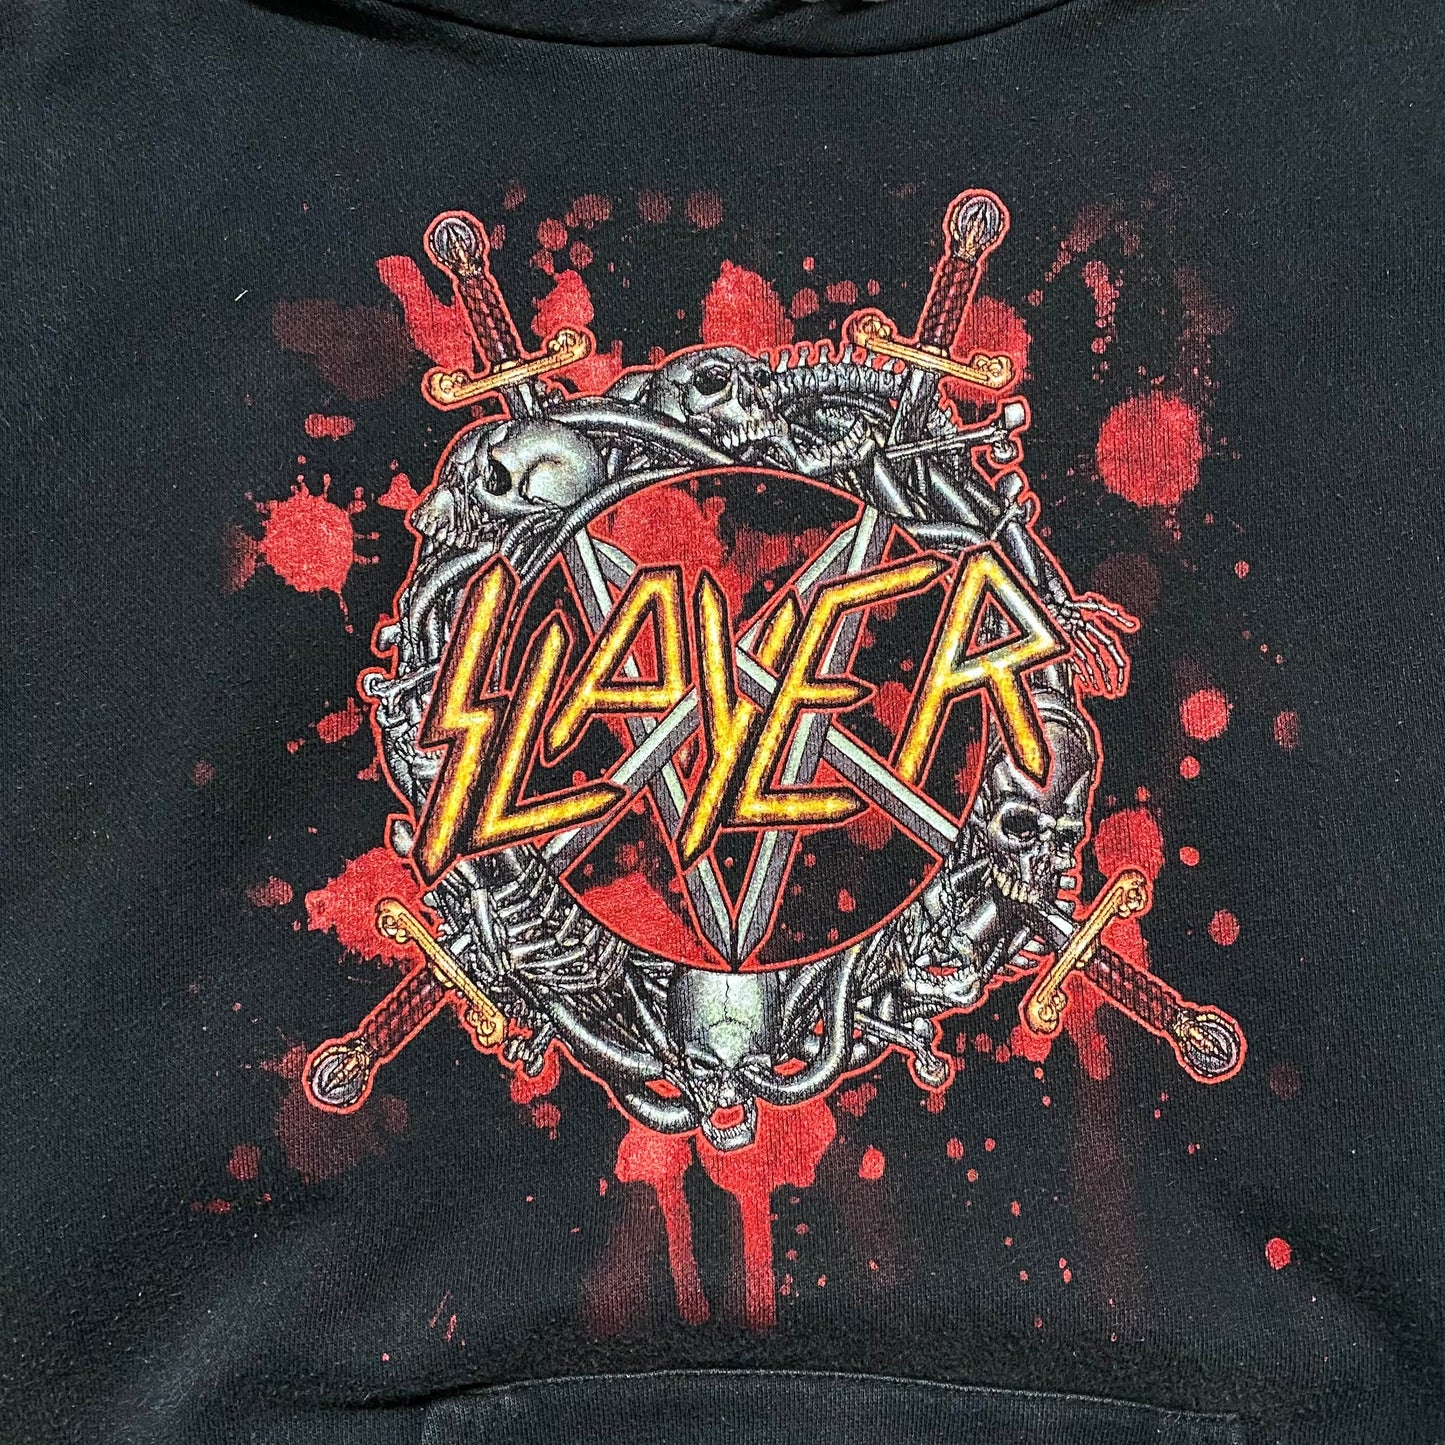 00's "SLAYER" Band design hoodie